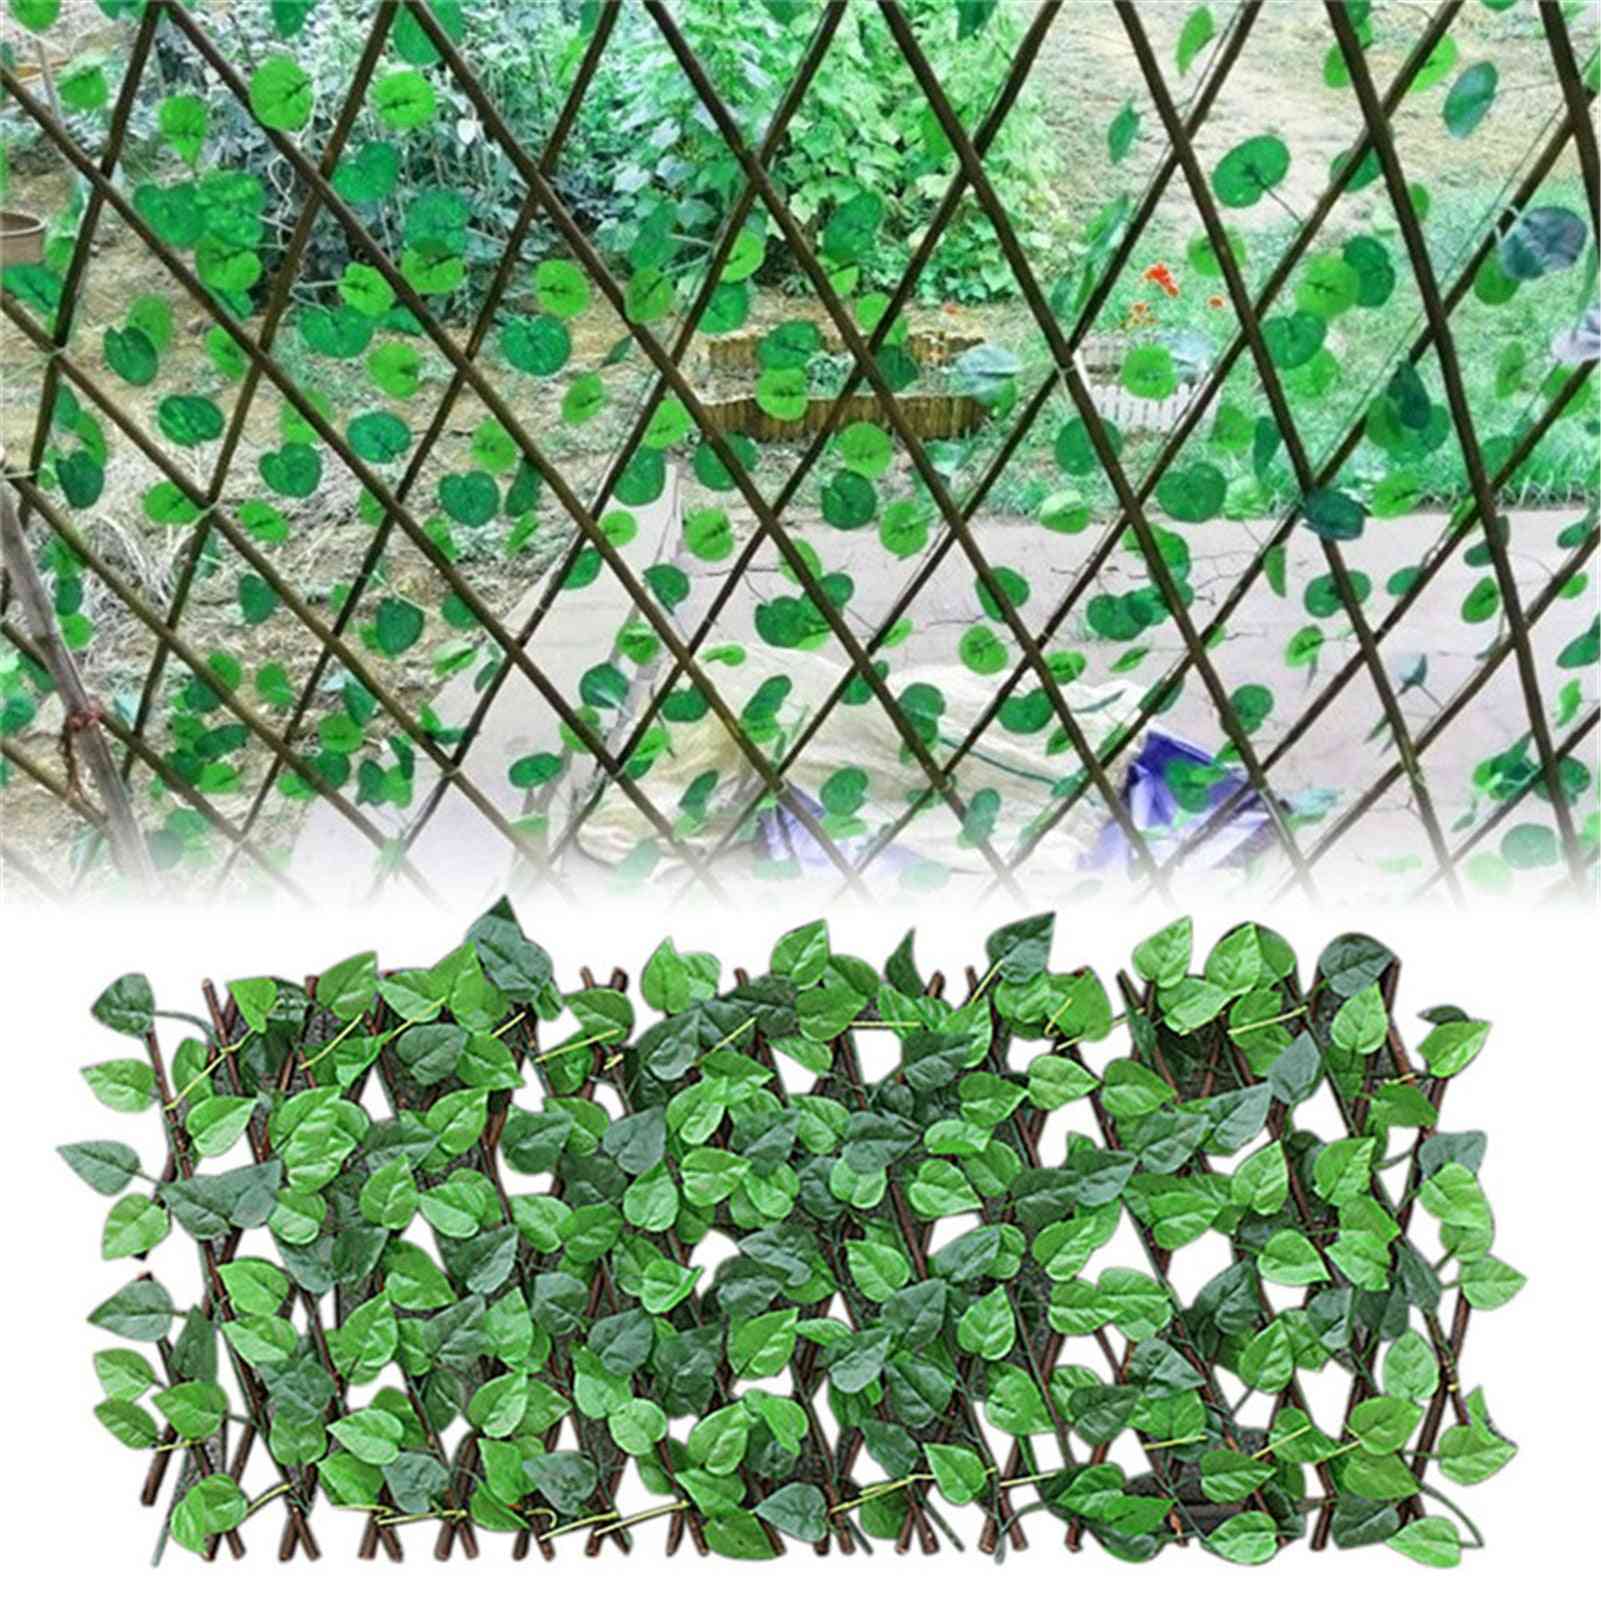 Artificial Garden- Expandable Apple Leaves Fence